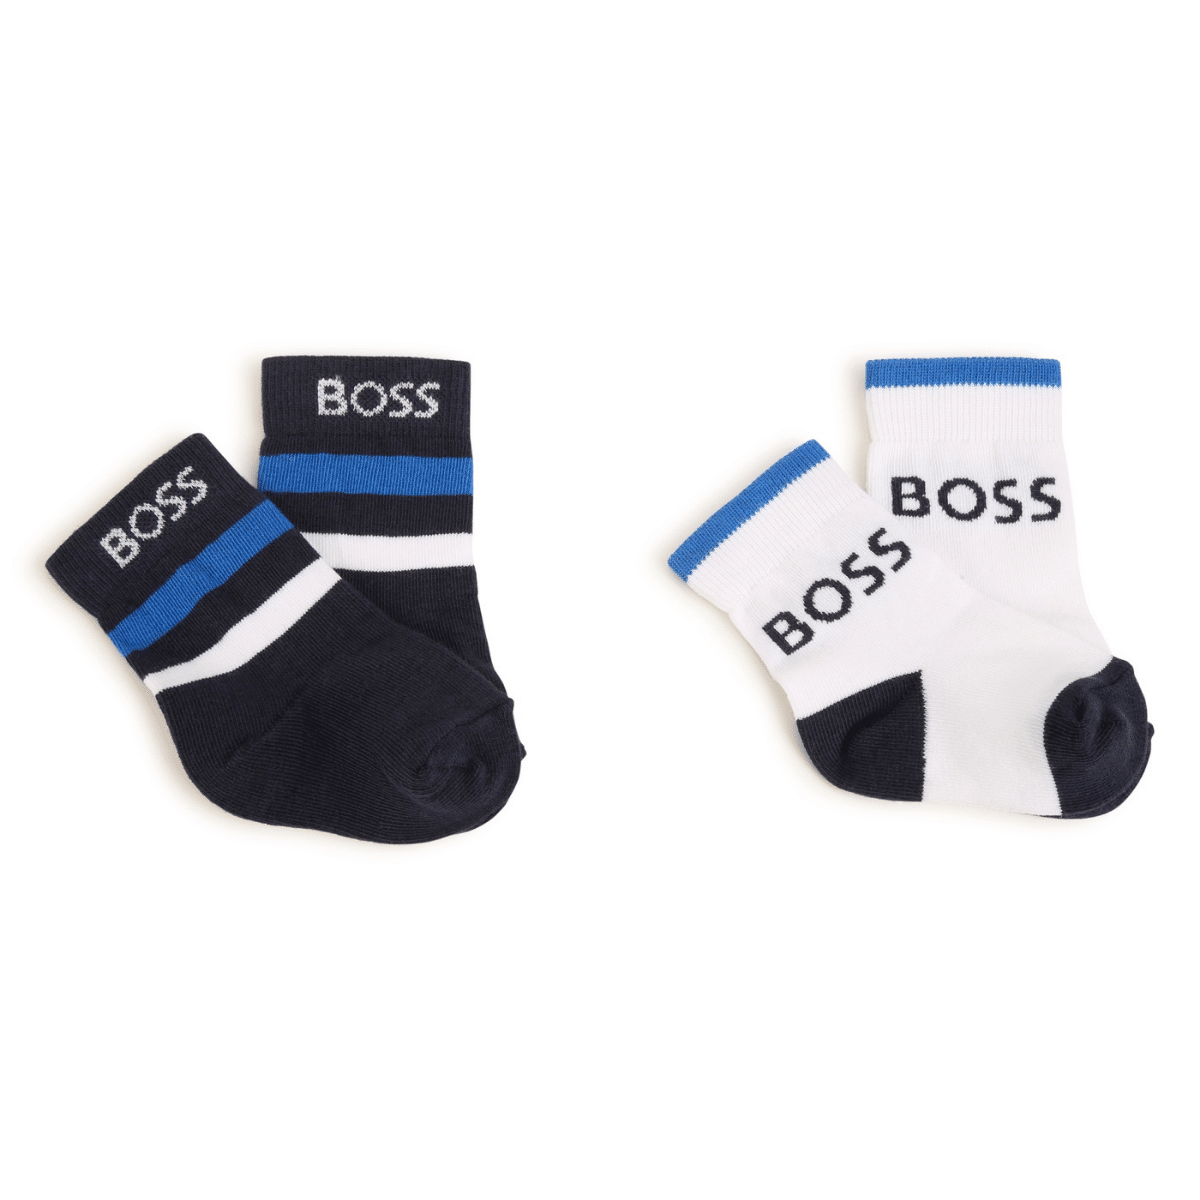 boss baby pair of socks white background